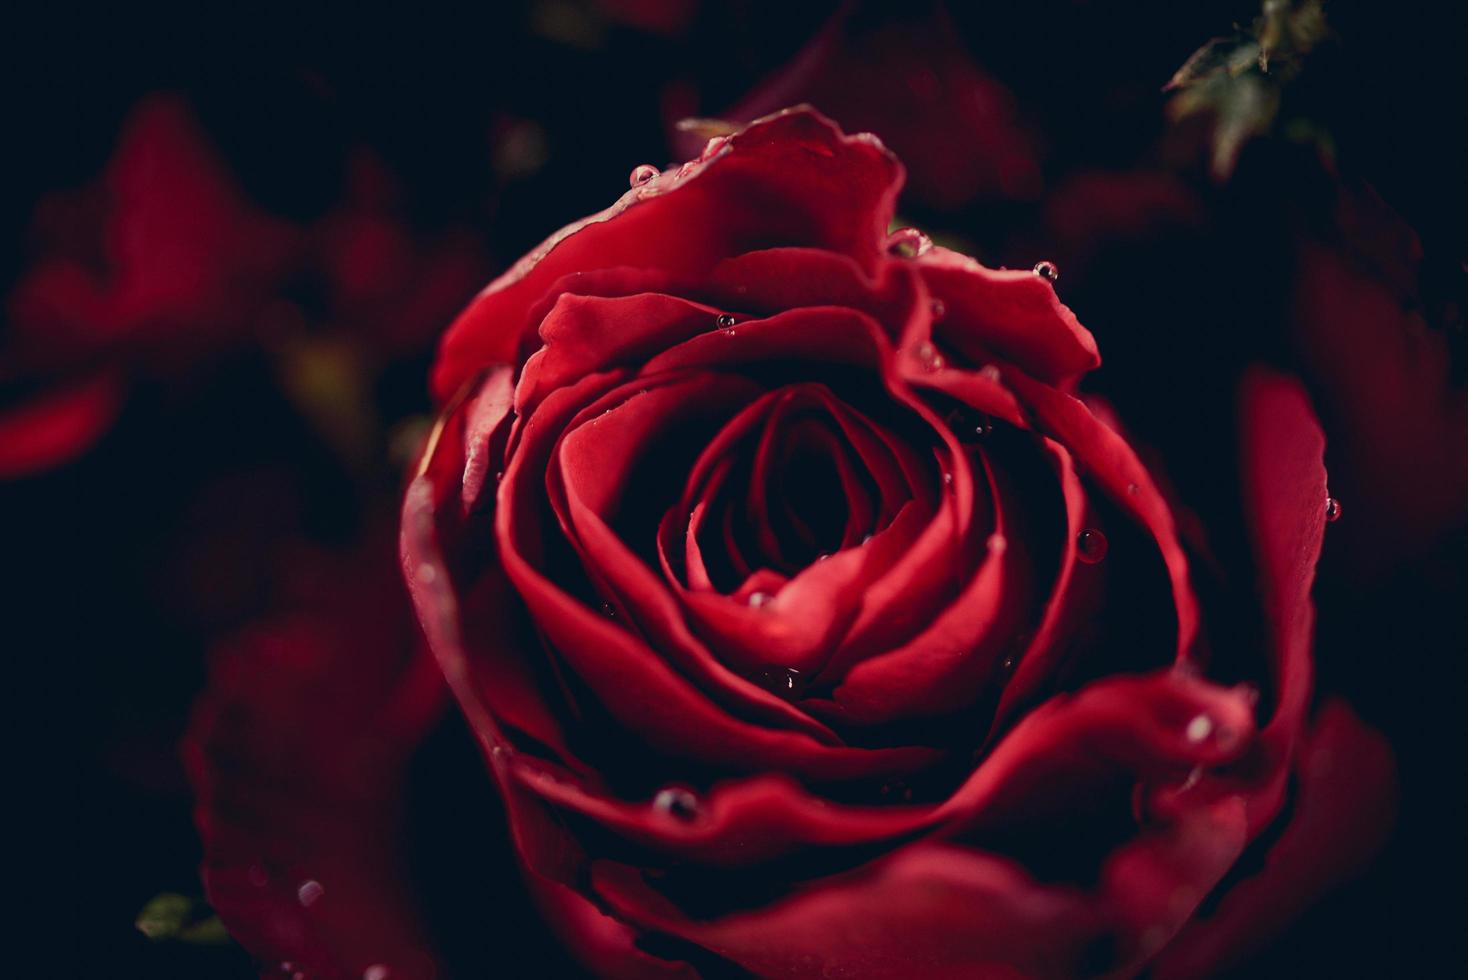 rosas rojas ramo de flores sobre fondo oscuro cerrar fondo rosa natural fresco flores amor romantico dia de san valentin foto